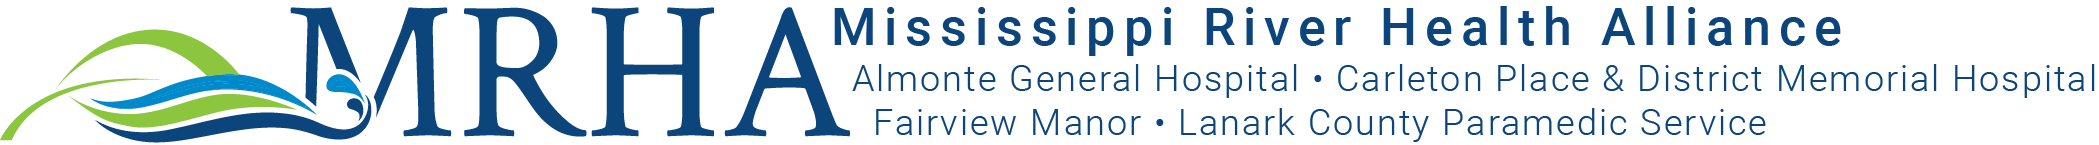 Mississippi River Health Alliance logo